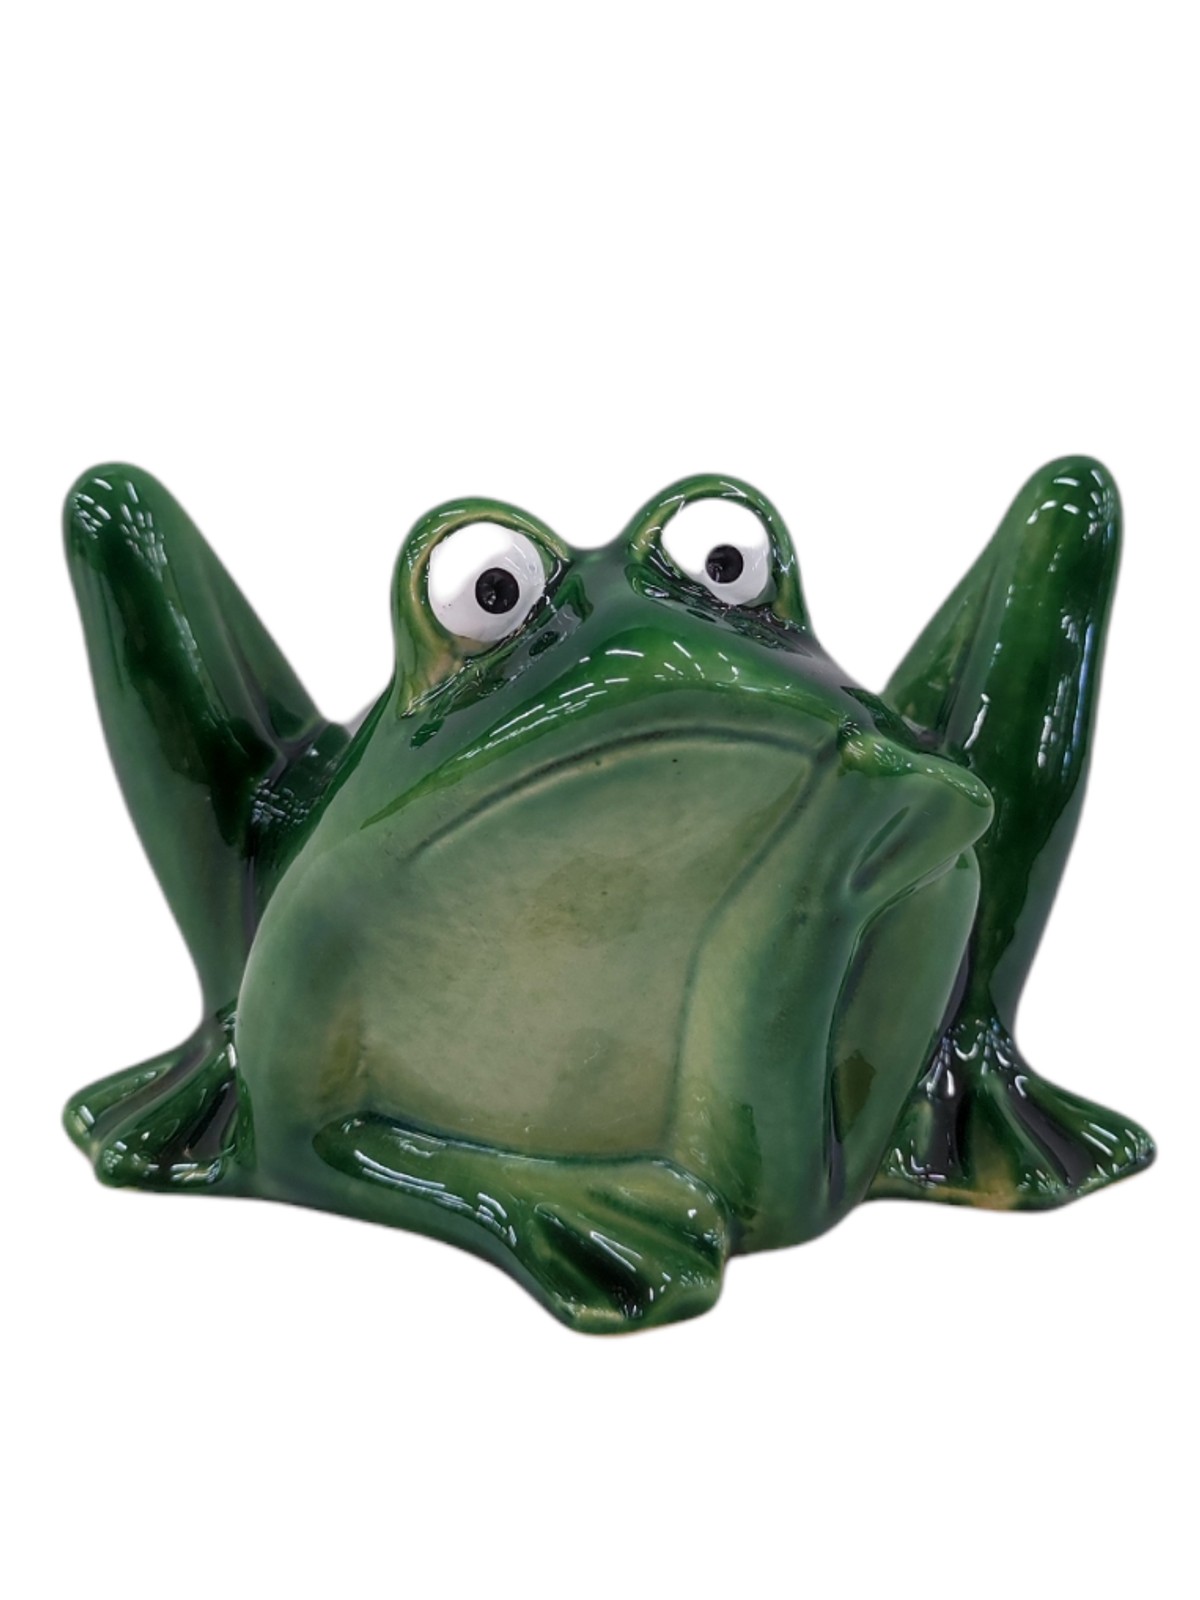 Decorative frog